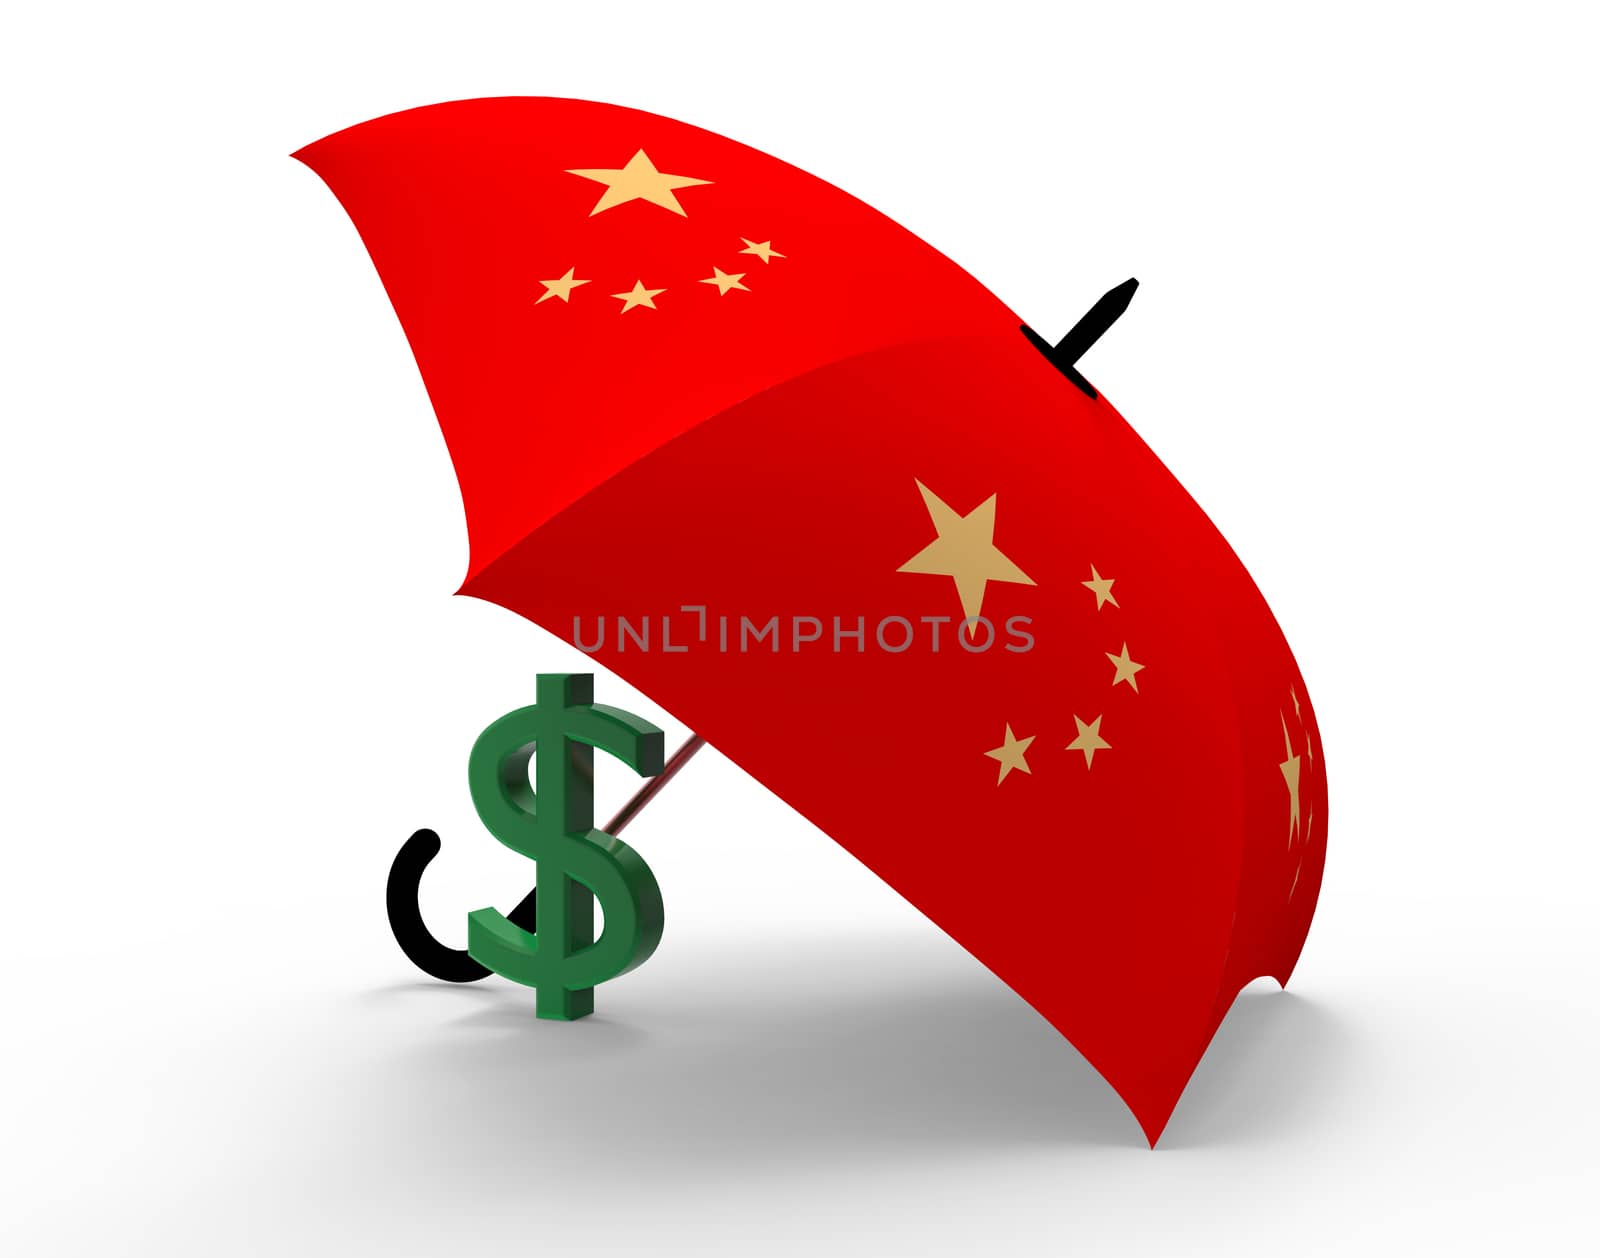 Dollar under umbrella by Boris15